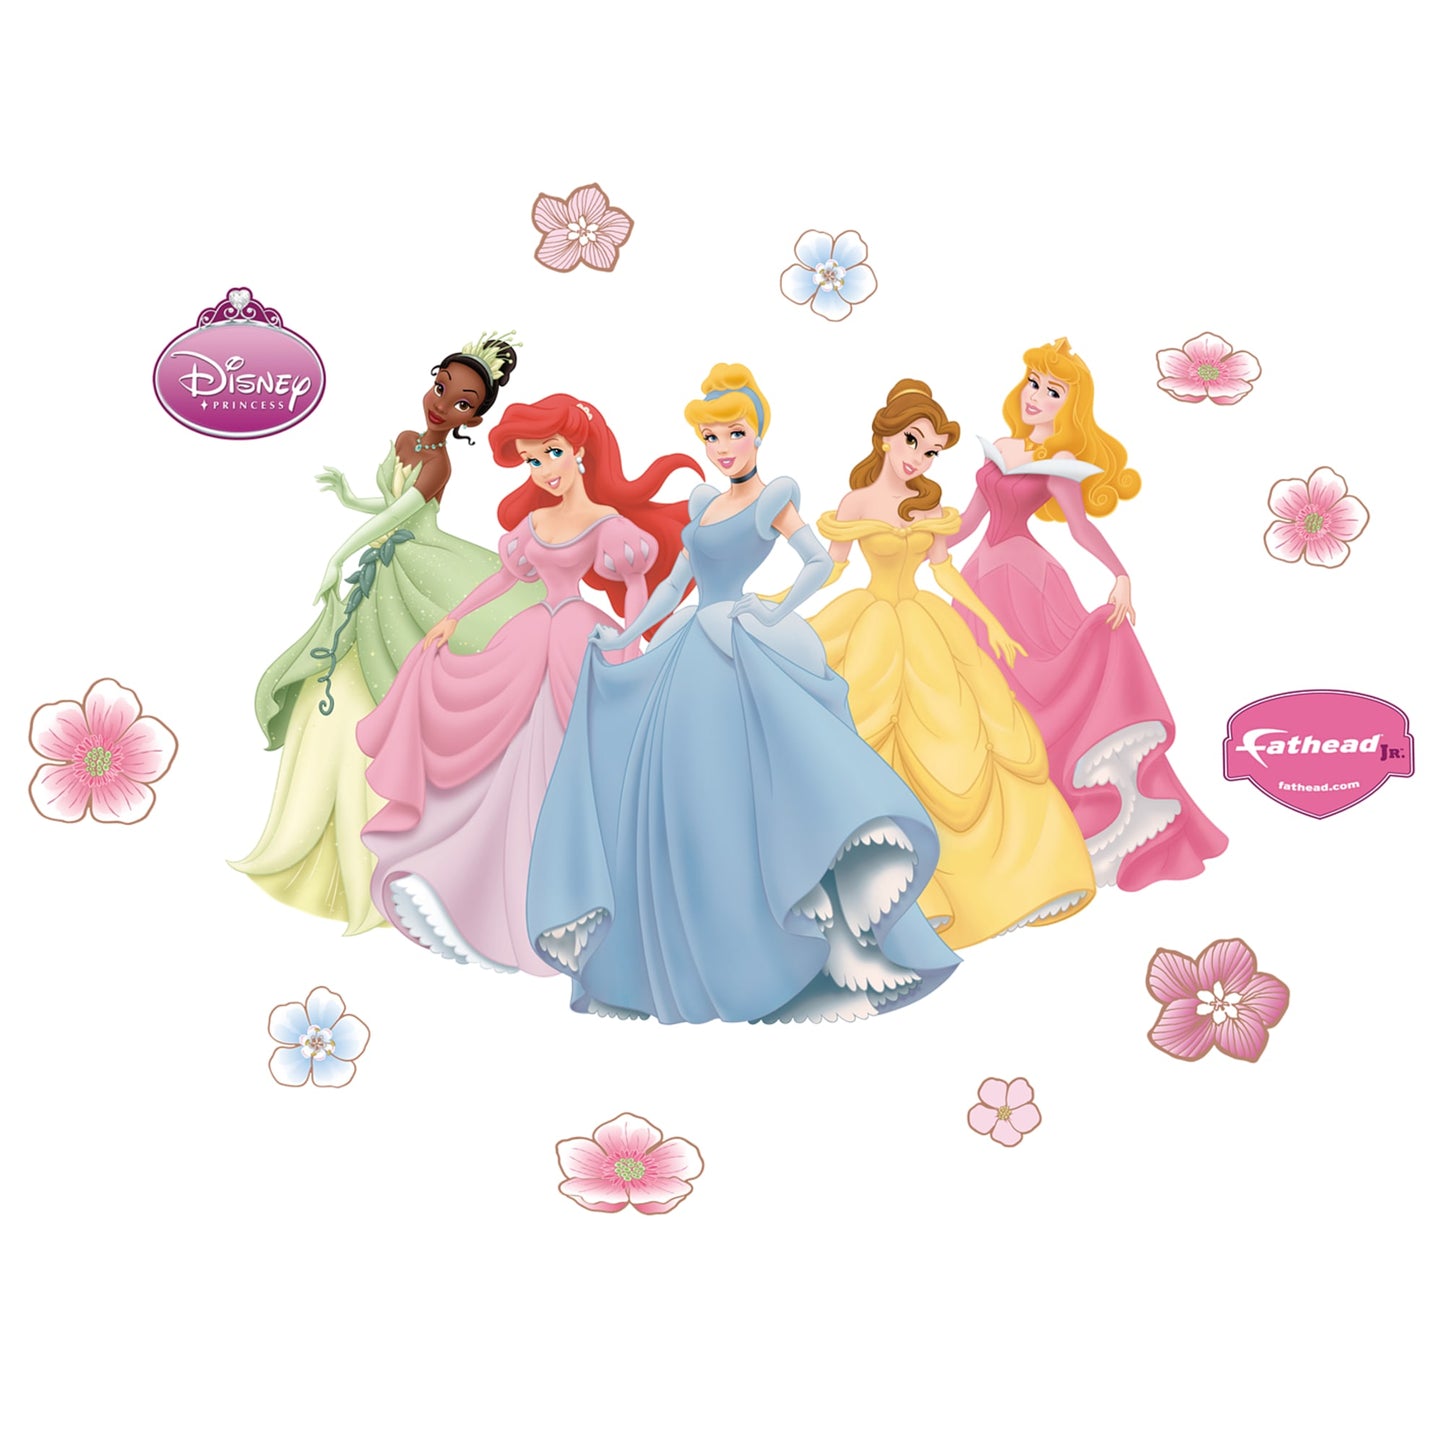 Aurora - Disney Princess Lifesized Standup *Made to order-please